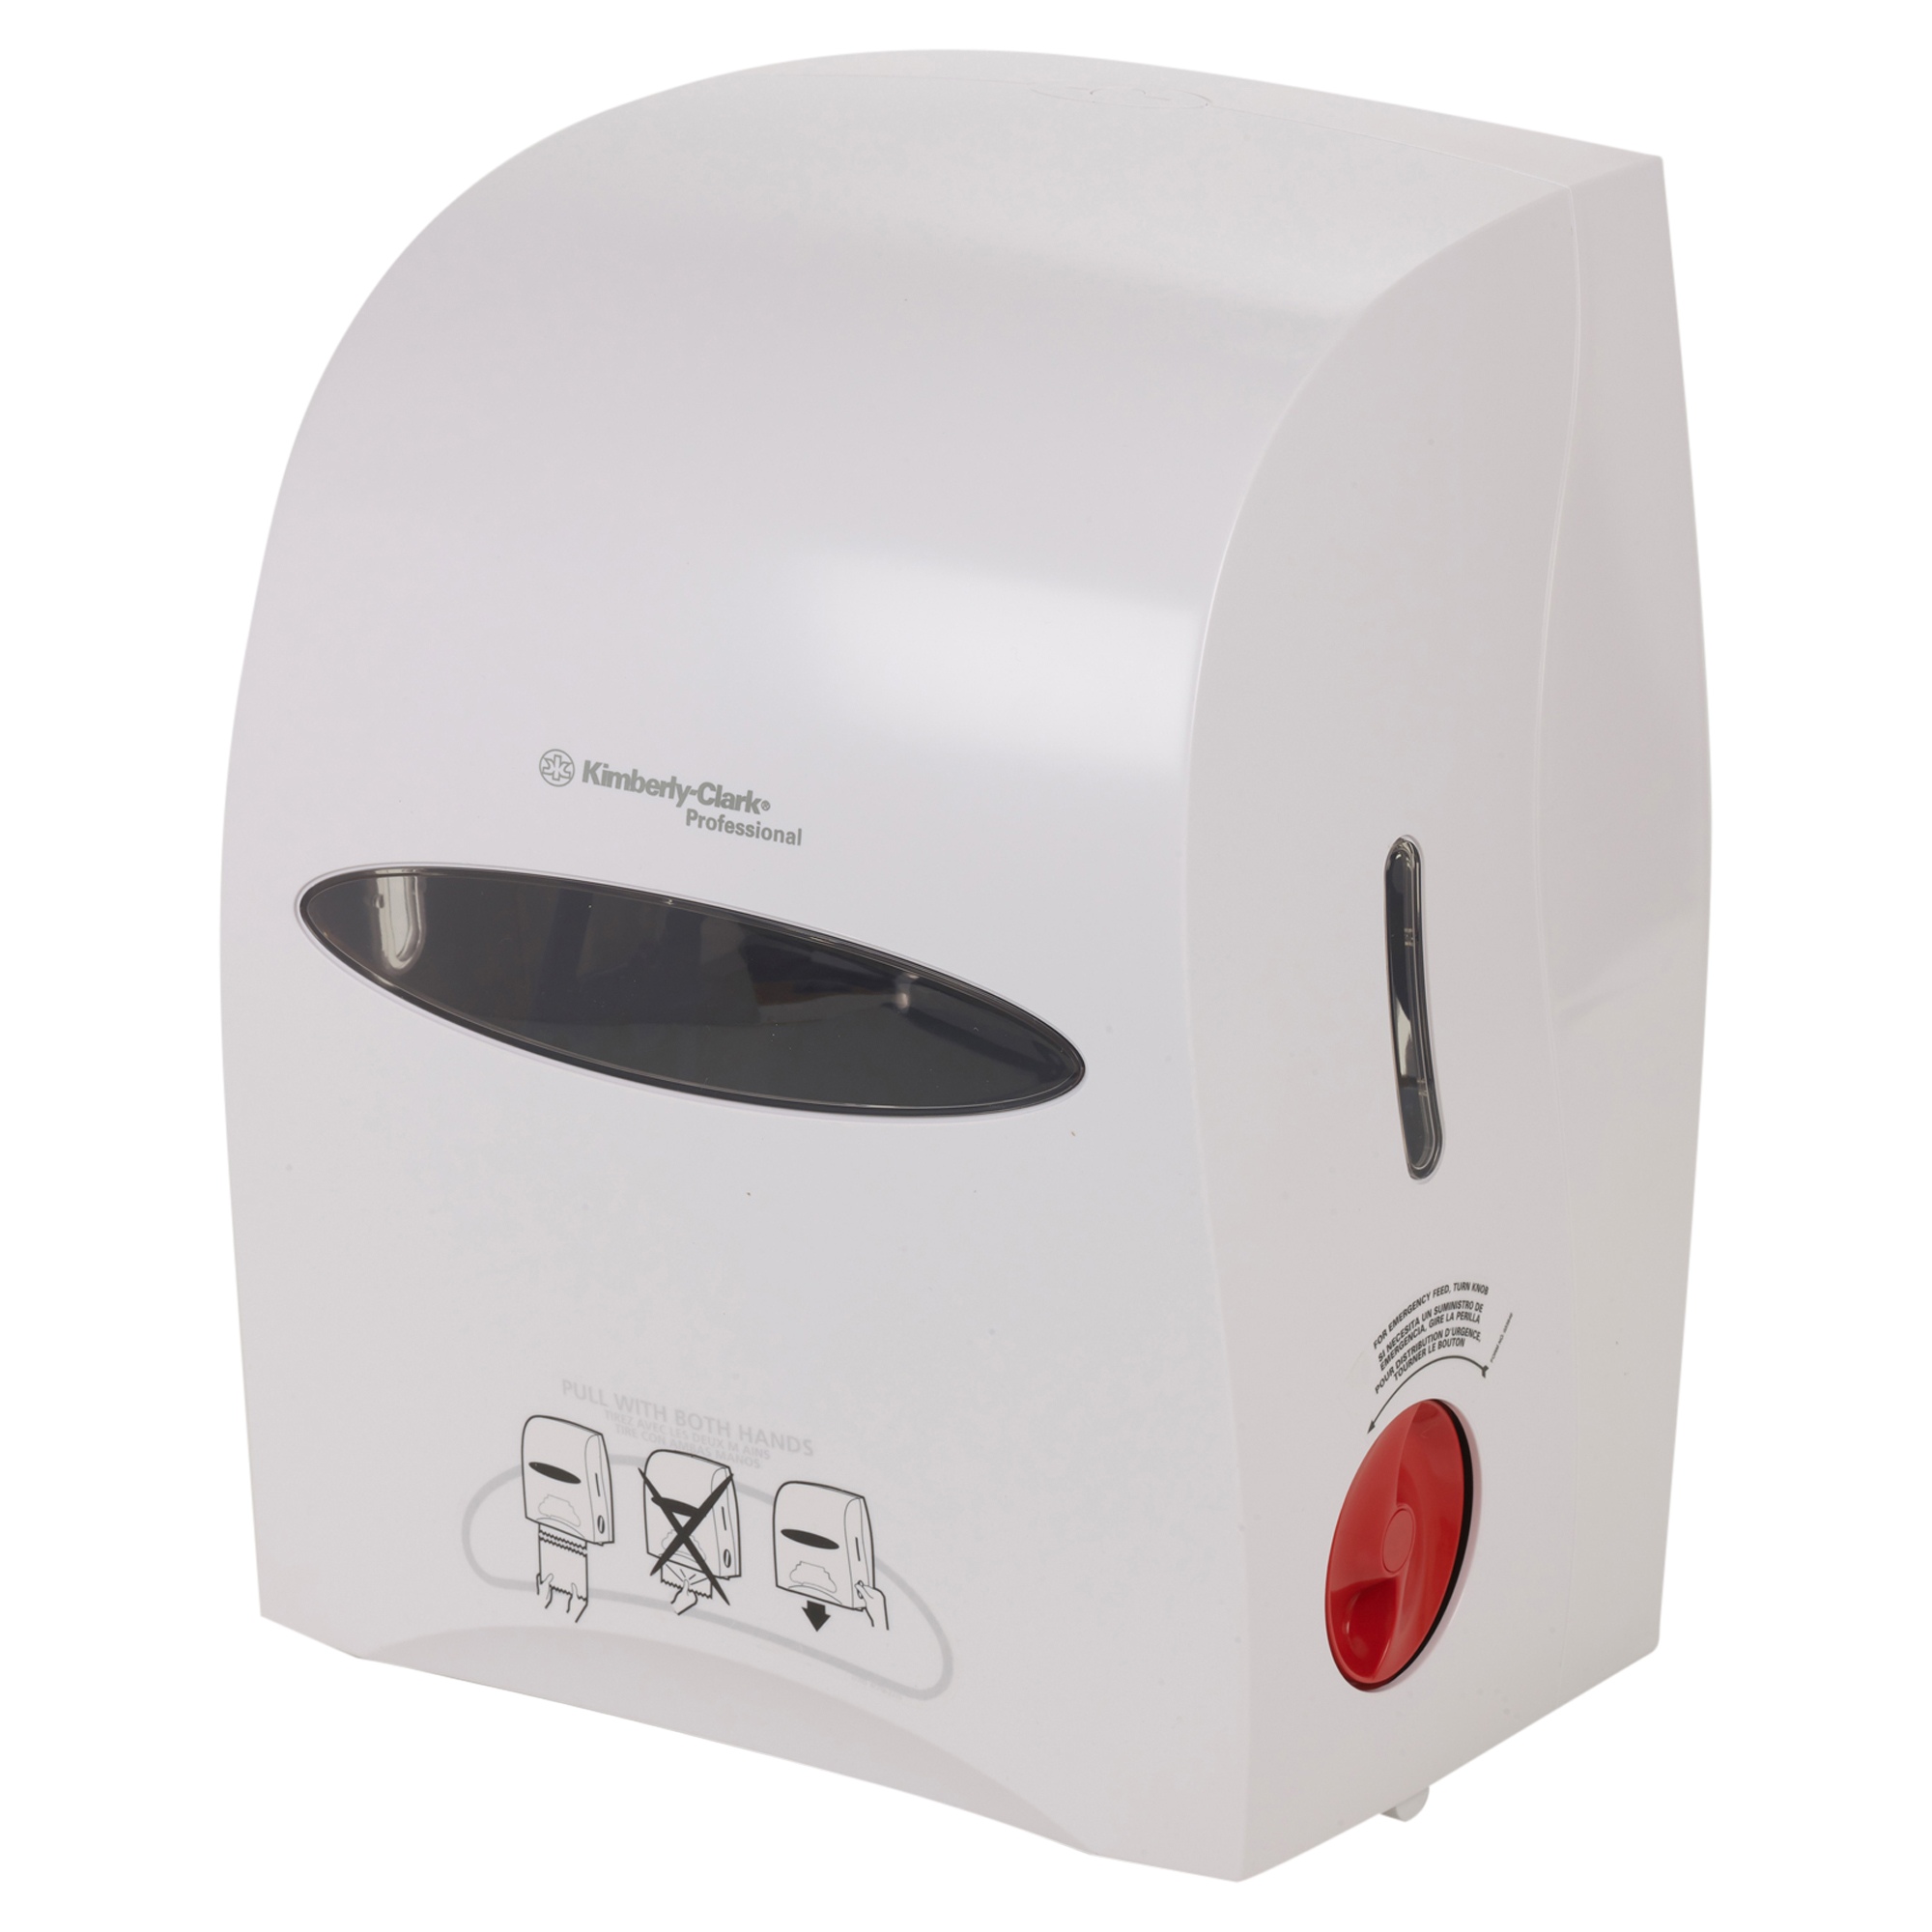 Kimberly Clark Manual Paper Towel Dispenser